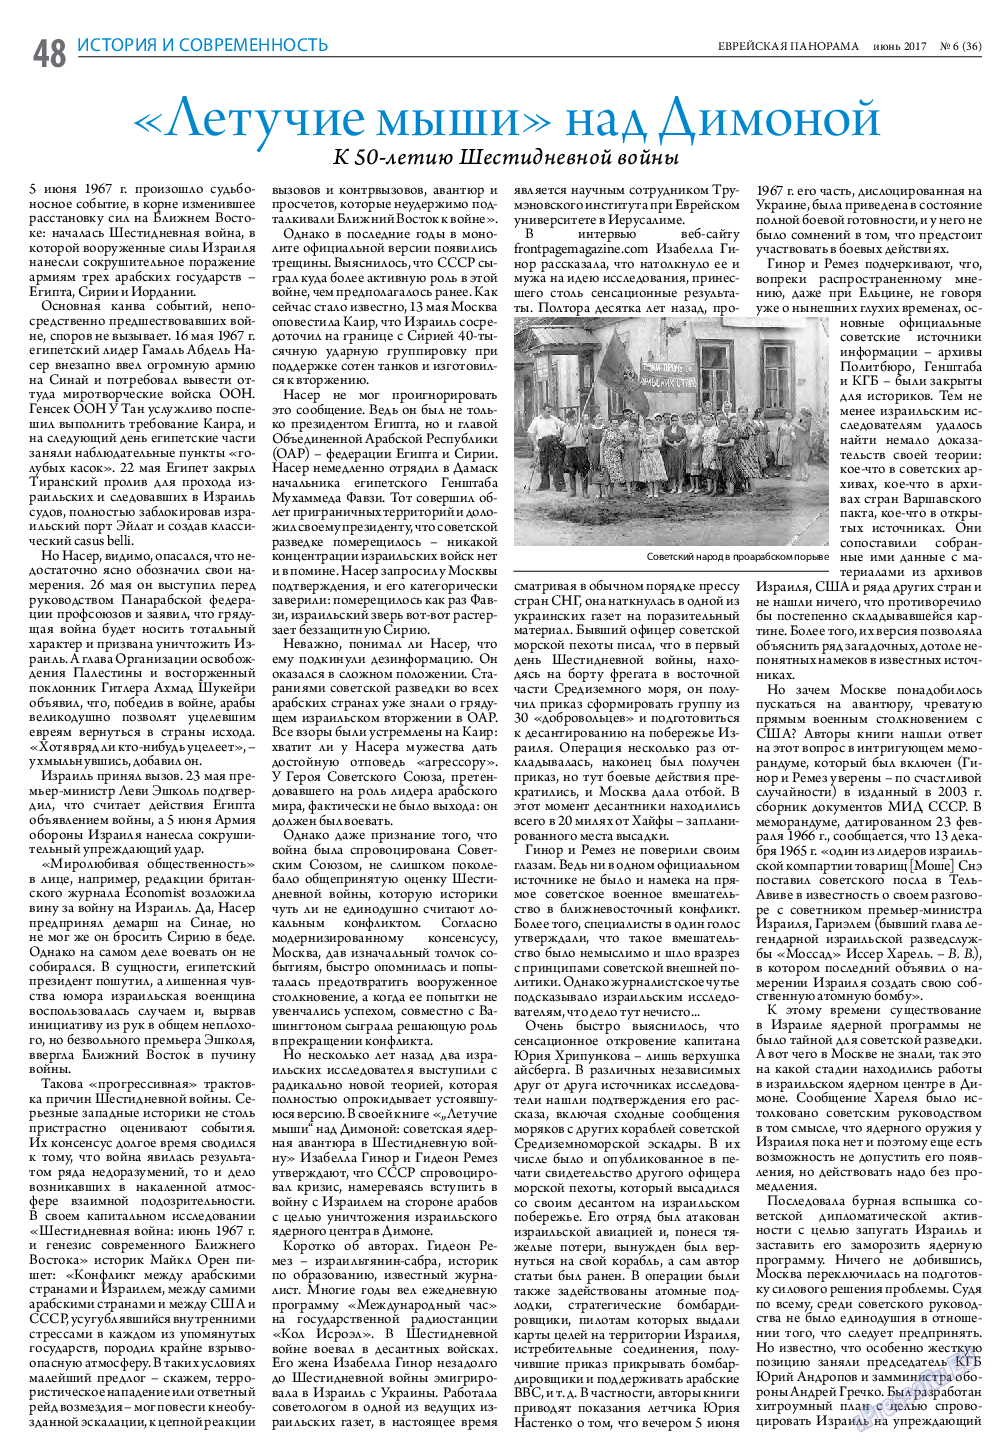 Еврейская панорама, газета. 2017 №6 стр.48